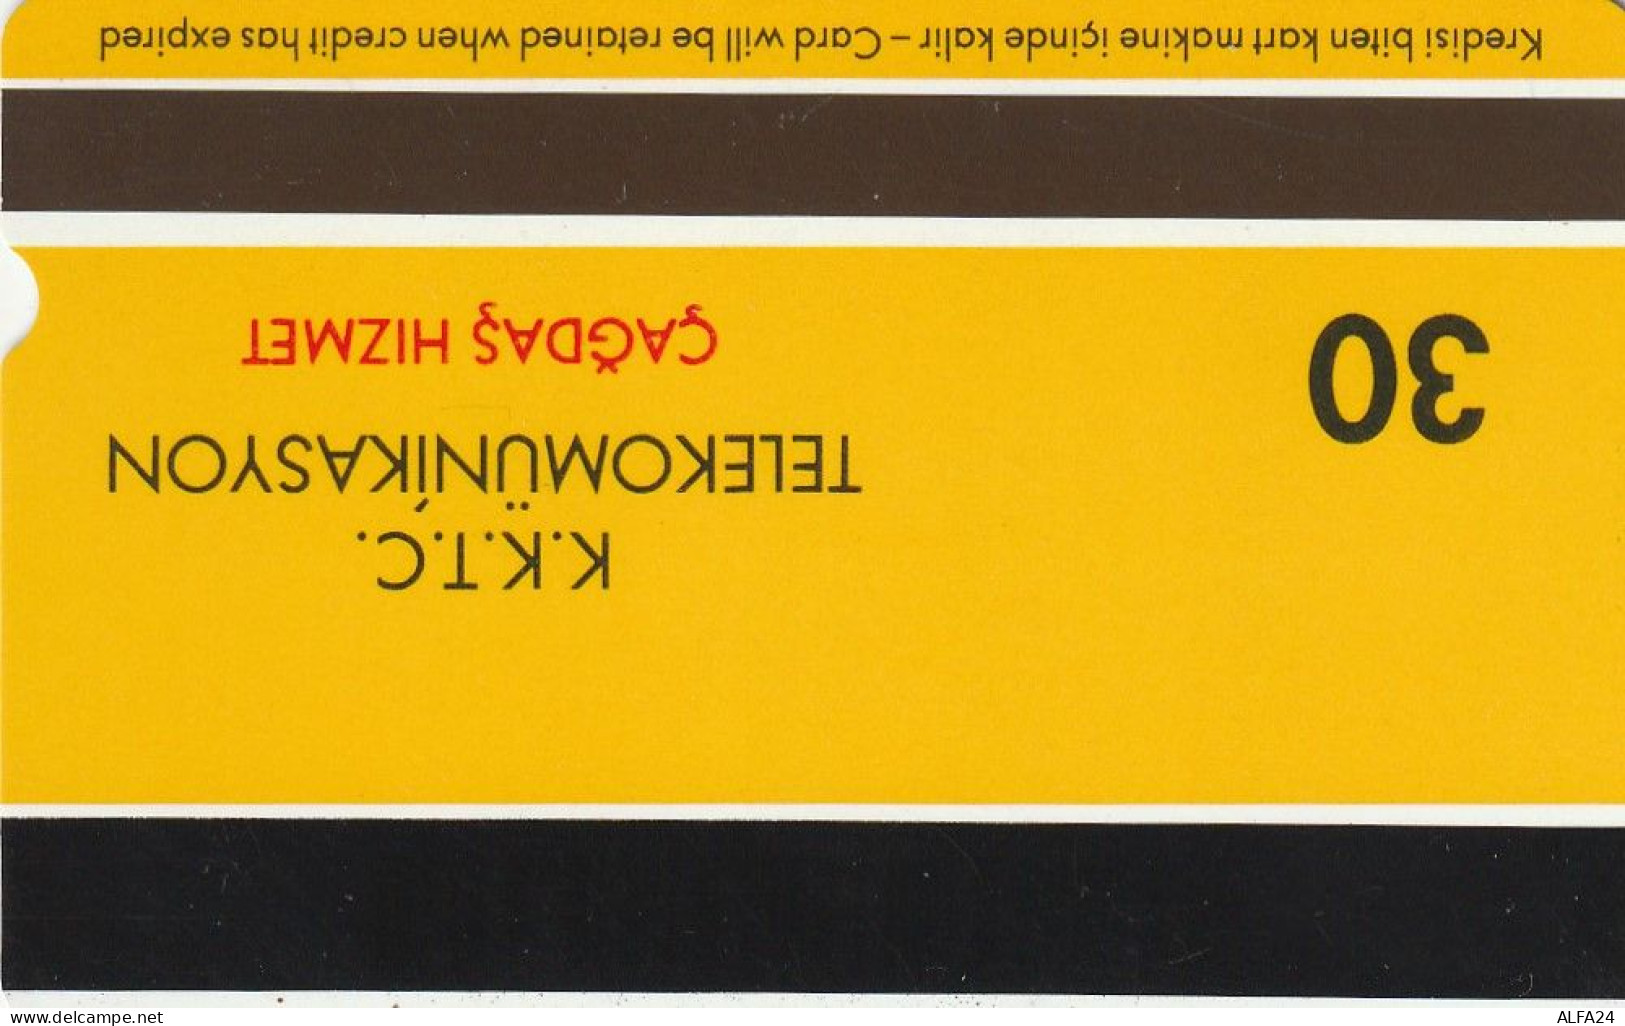 PHONE CARD CIPRO TURCA  (E83.7.5 - Zypern